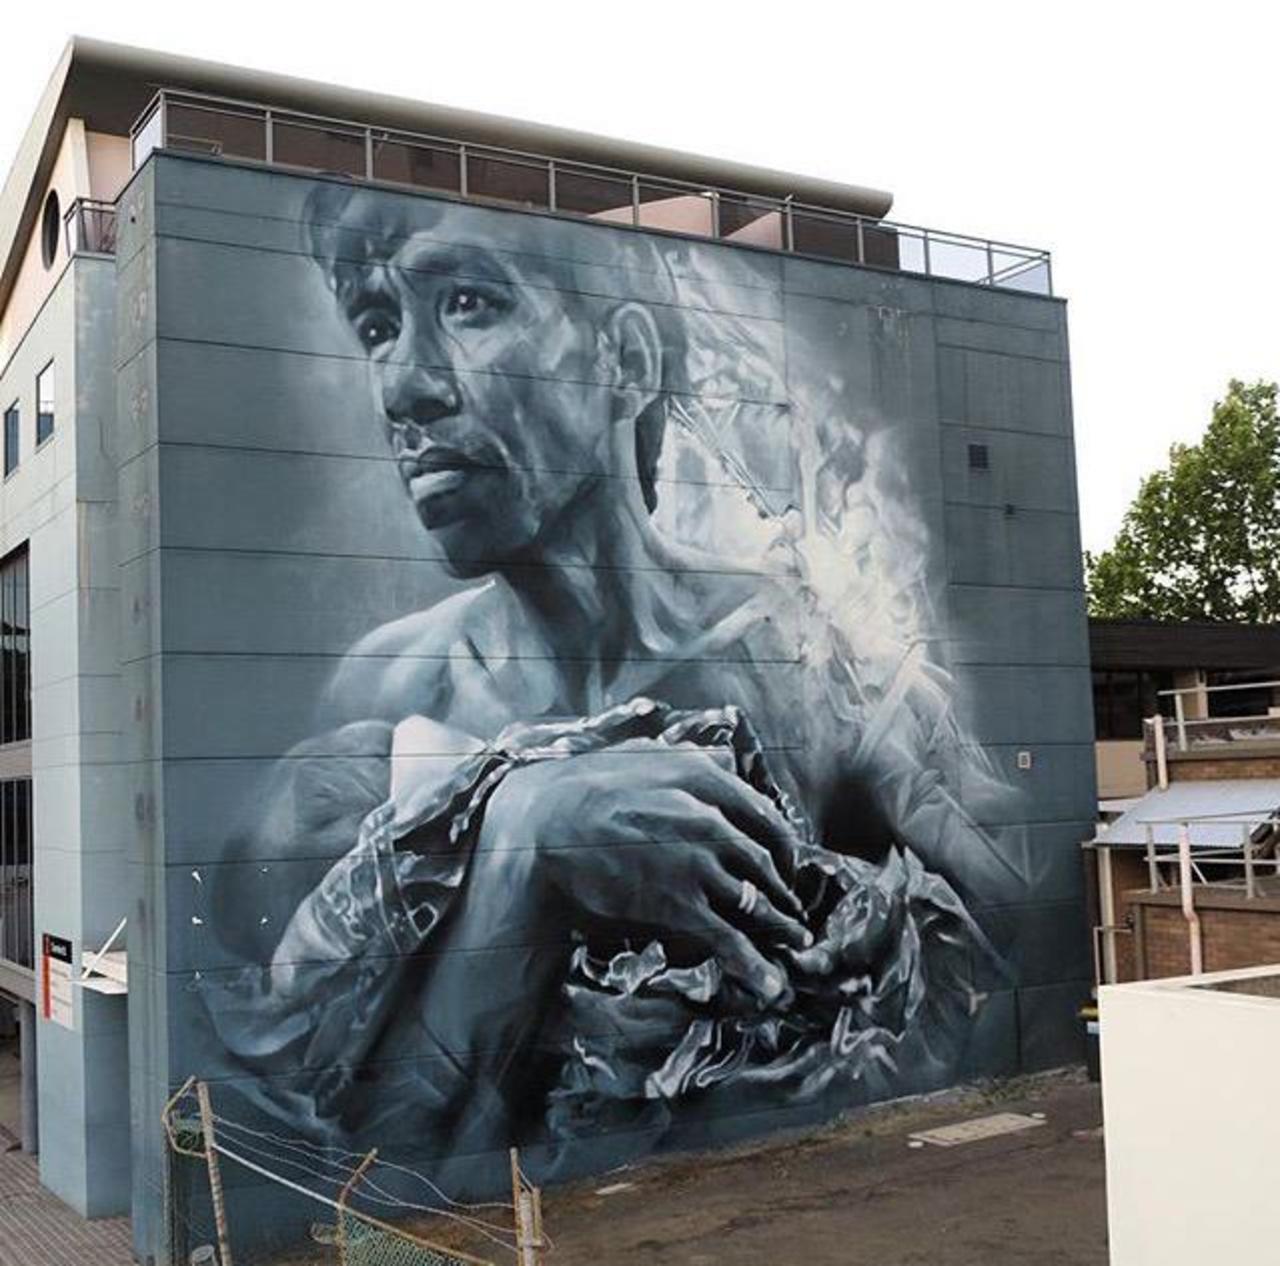 New Street Art by Guido Van Helten in Wollongong Australia 

#art #graffiti #mural #streetart http://t.co/hllodgtUKE